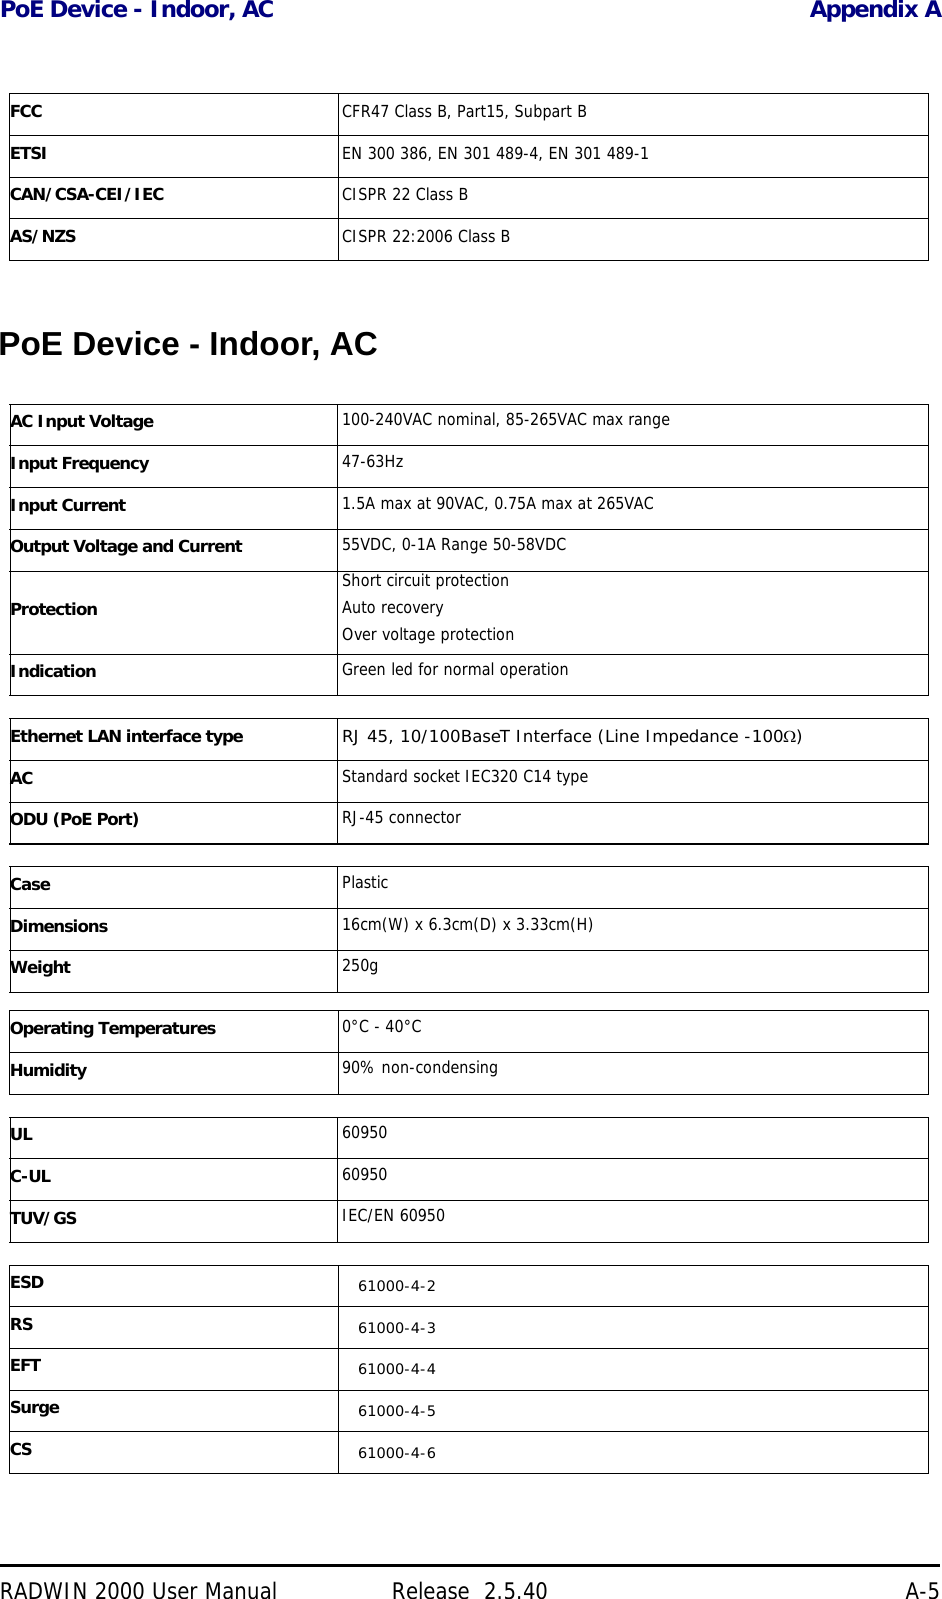 PoE Device - Indoor, AC Appendix ARADWIN 2000 User Manual Release  2.5.40 A-5PoE Device - Indoor, ACFCC CFR47 Class B, Part15, Subpart BETSI EN 300 386, EN 301 489-4, EN 301 489-1CAN/CSA-CEI/IEC CISPR 22 Class BAS/NZS CISPR 22:2006 Class BAC Input Voltage 100-240VAC nominal, 85-265VAC max rangeInput Frequency 47-63HzInput Current 1.5A max at 90VAC, 0.75A max at 265VACOutput Voltage and Current 55VDC, 0-1A Range 50-58VDCProtectionShort circuit protectionAuto recoveryOver voltage protectionIndication Green led for normal operationEthernet LAN interface type RJ 45, 10/100BaseT Interface (Line Impedance -100)AC Standard socket IEC320 C14 typeODU (PoE Port) RJ-45 connectorCase PlasticDimensions 16cm(W) x 6.3cm(D) x 3.33cm(H)Weight 250gOperating Temperatures 0°C - 40°CHumidity 90% non-condensingUL 60950C-UL 60950TUV/GS IEC/EN 60950ESD 61000-4-2RS 61000-4-3EFT 61000-4-4Surge 61000-4-5CS 61000-4-6